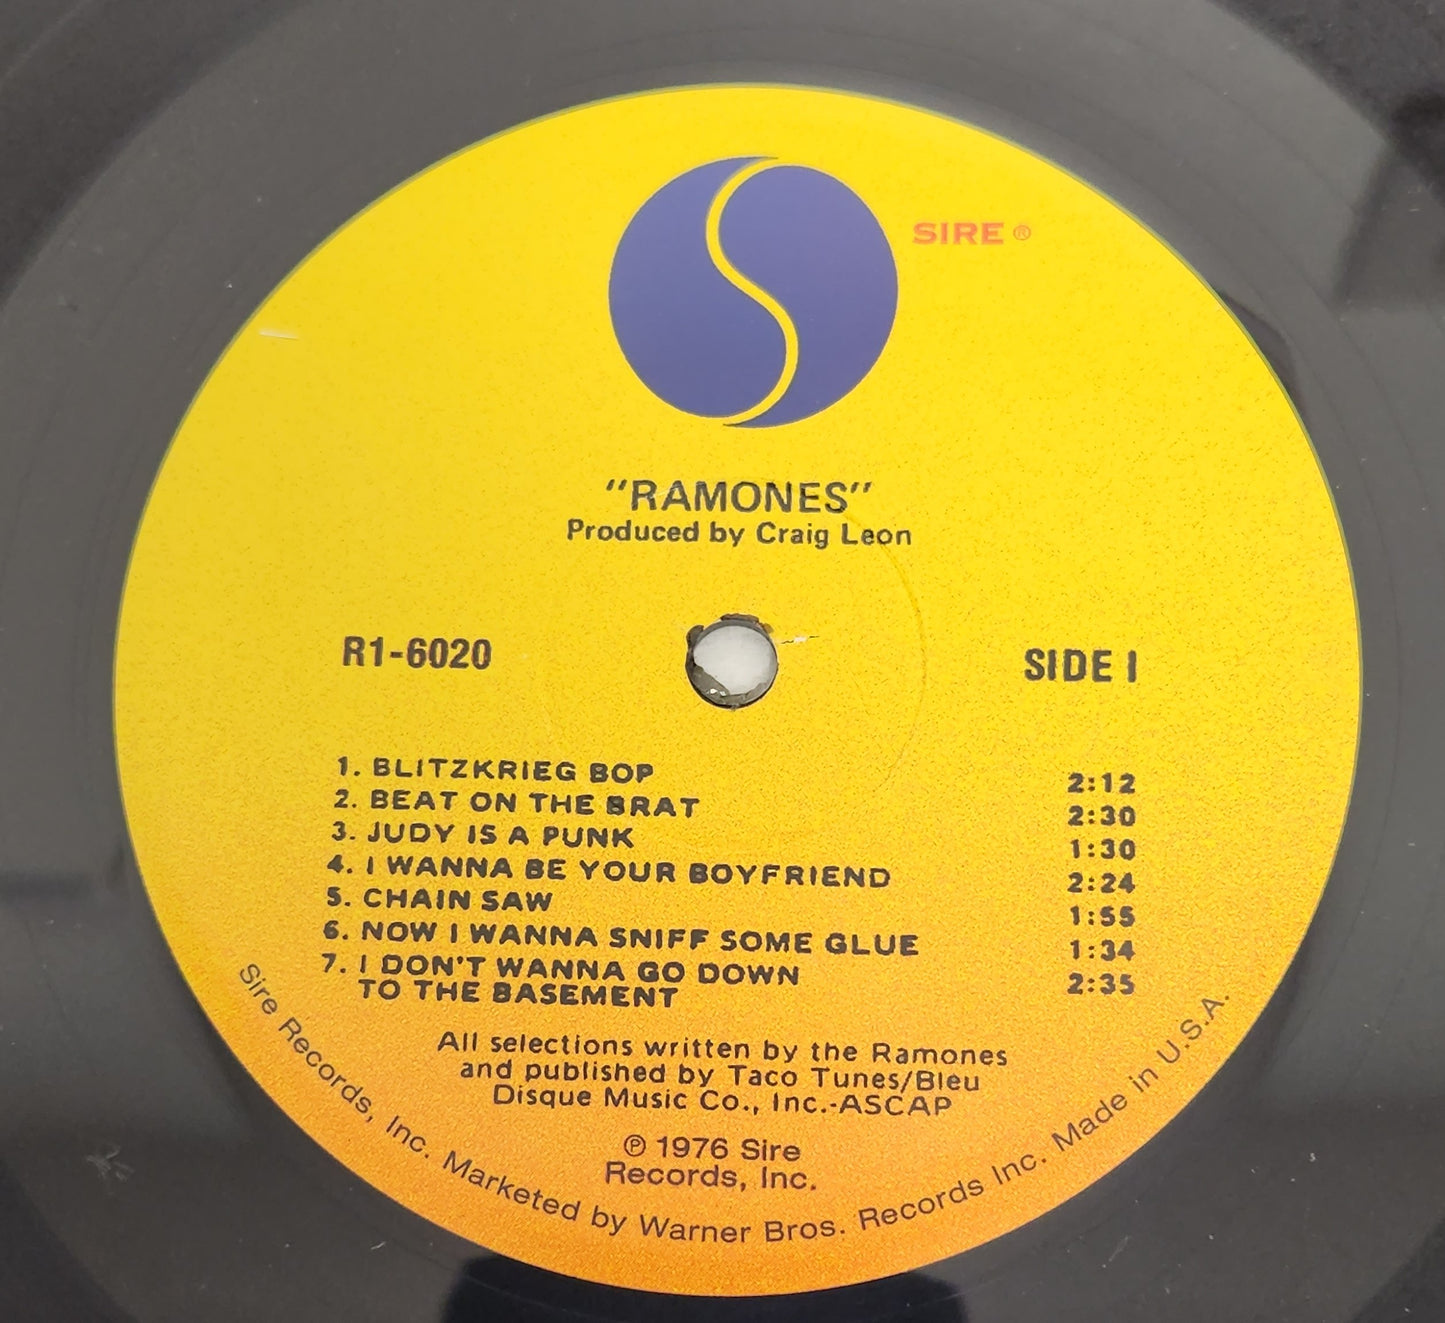 Ramones Self-Titled 2011 Reissue Punk Rock Record Album